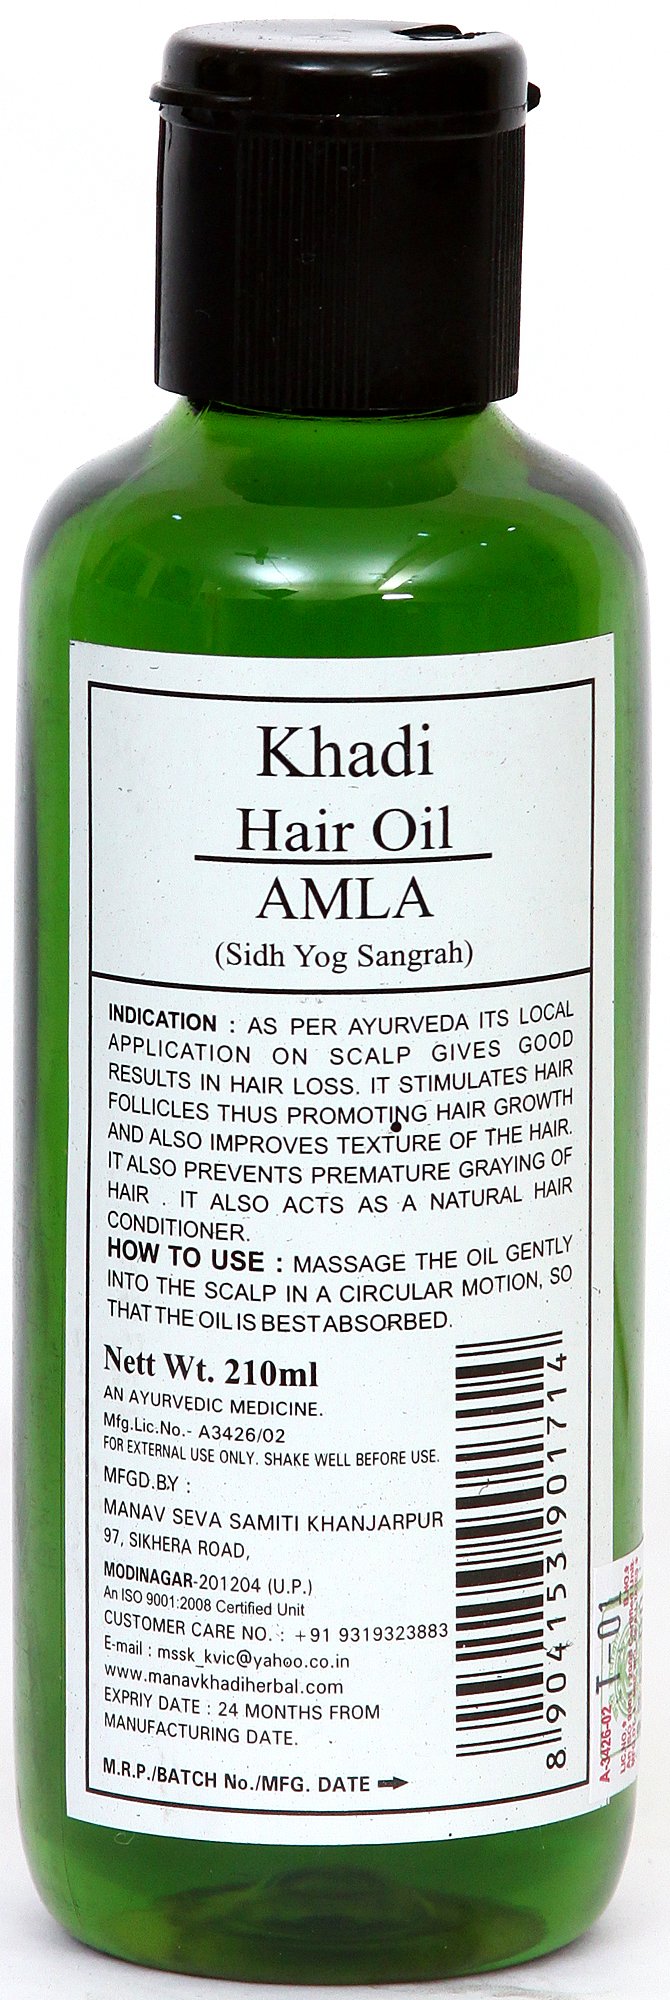 Khadi Hair Oil AMLA (Sidh Yog Sangrah) - book cover